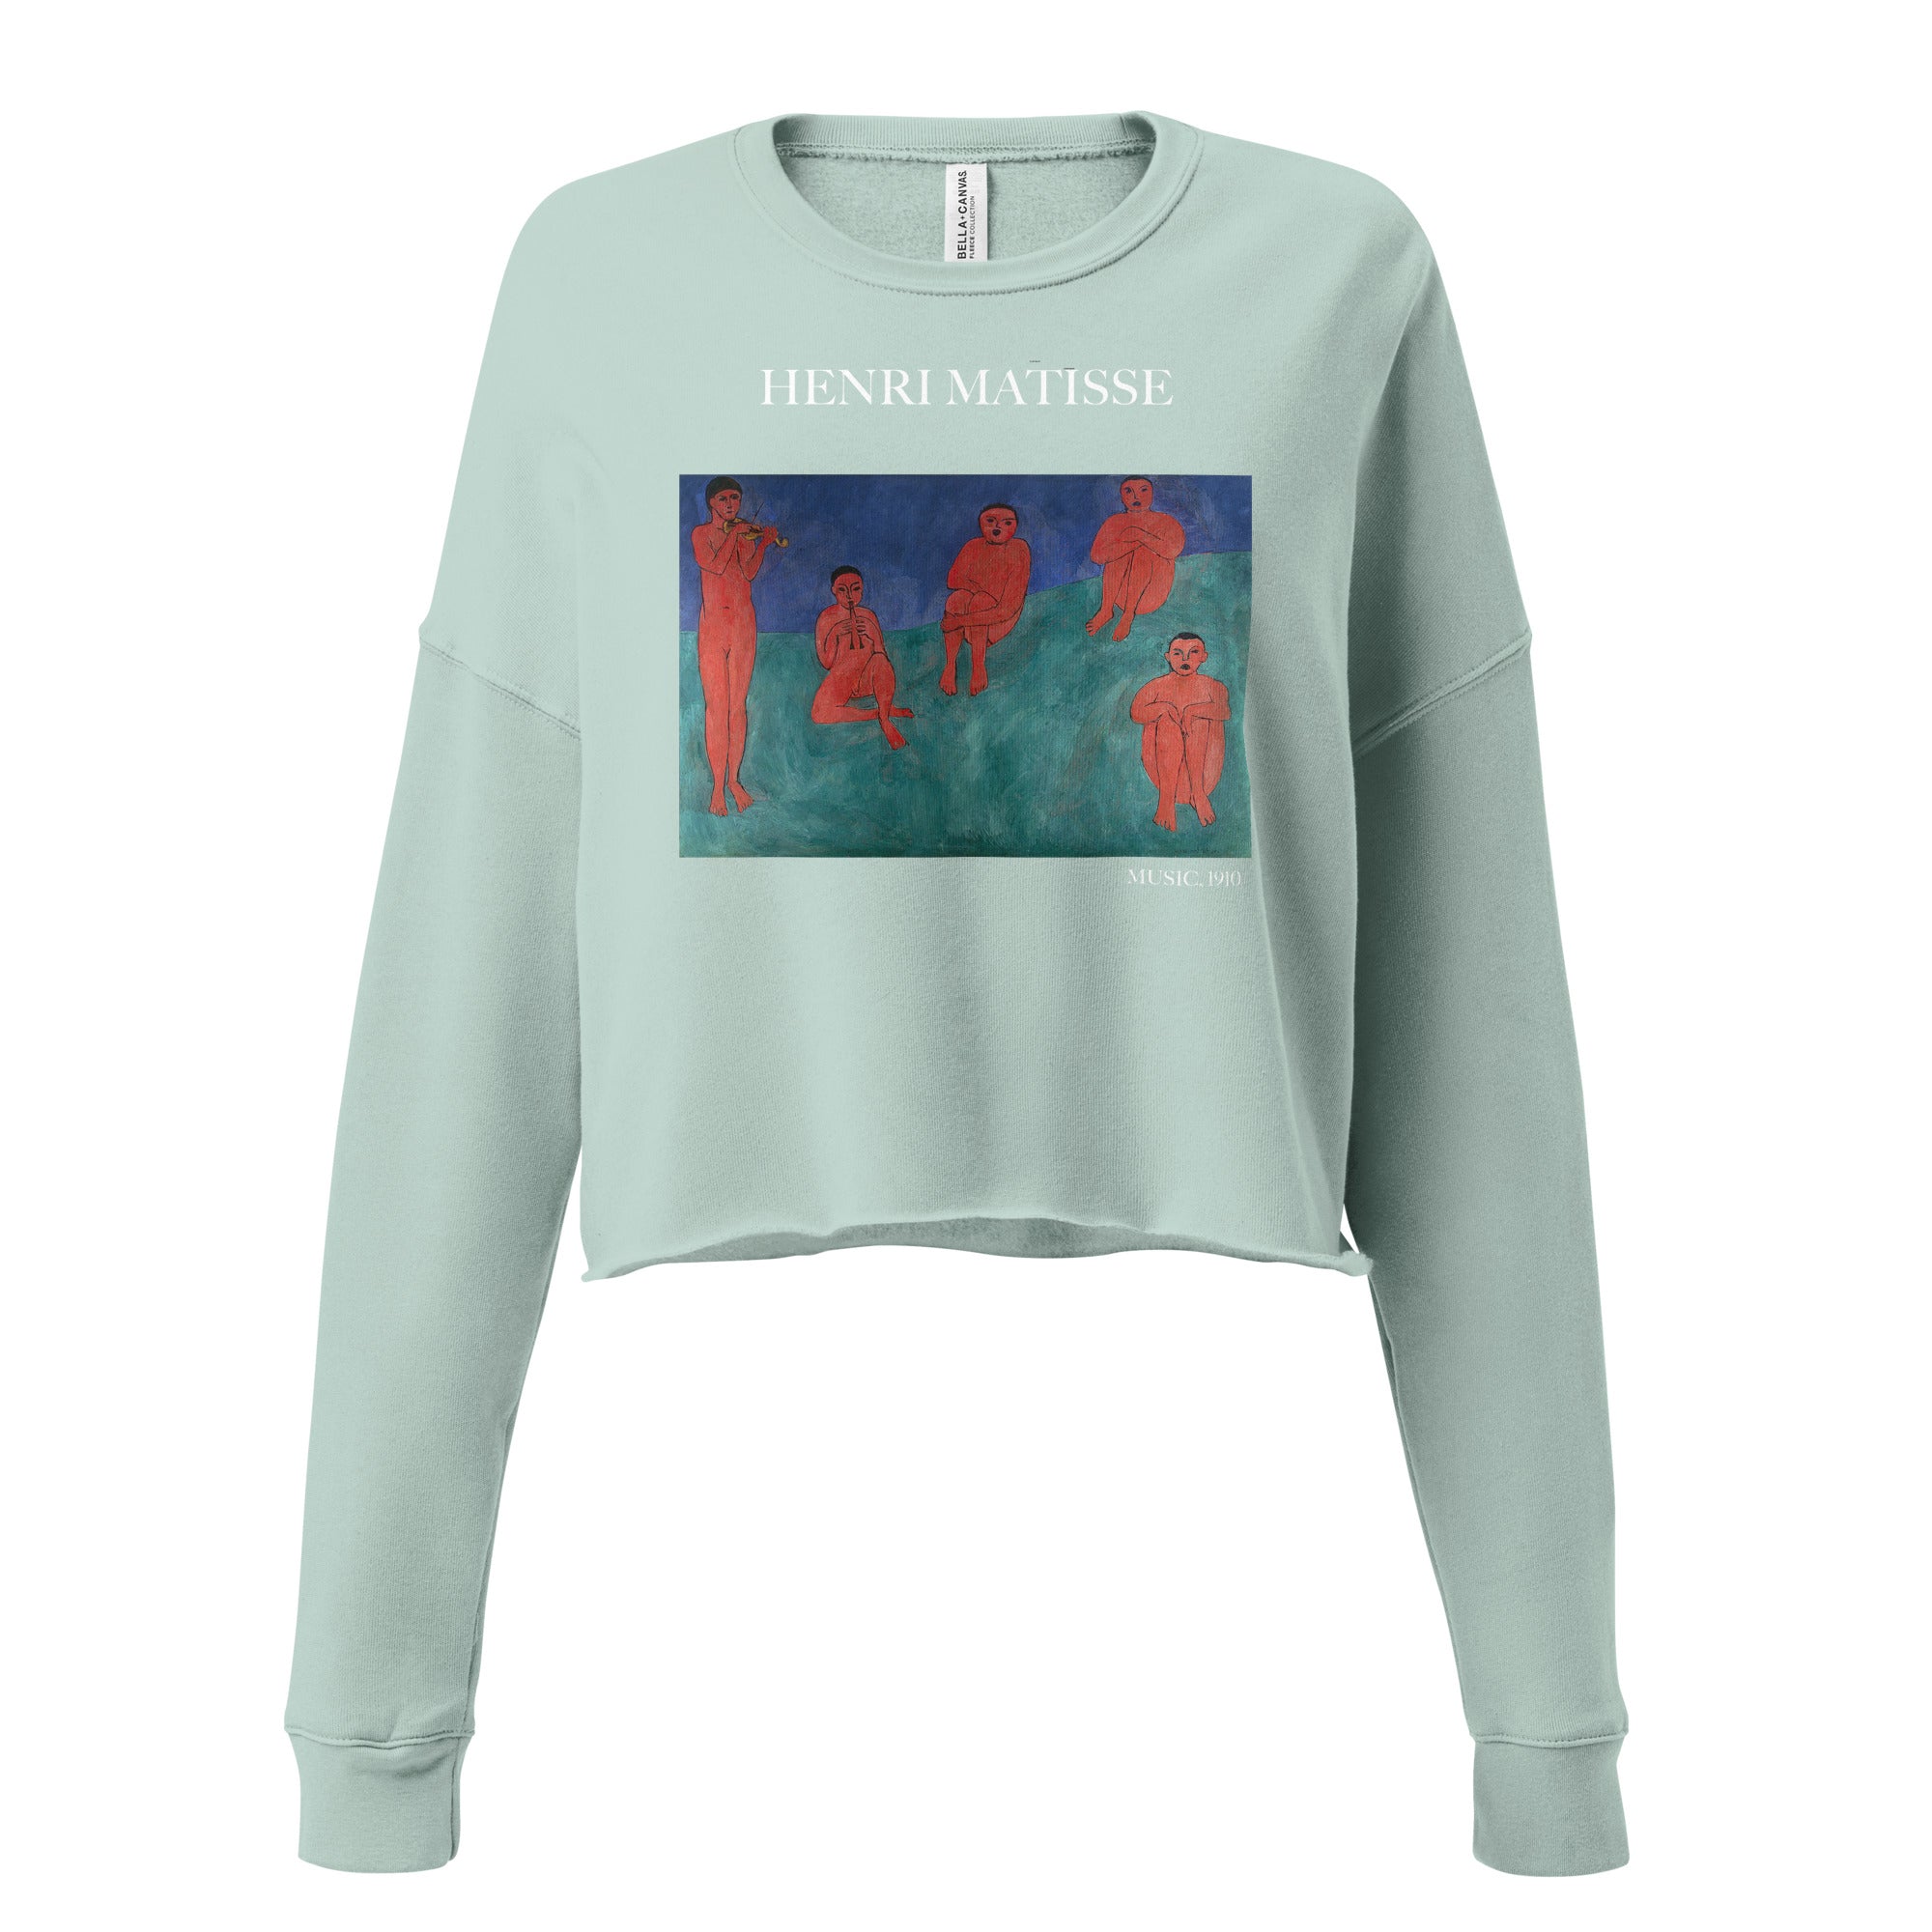 Henri Matisse 'Music' Famous Painting Cropped Sweatshirt | Premium Art Cropped Sweatshirt